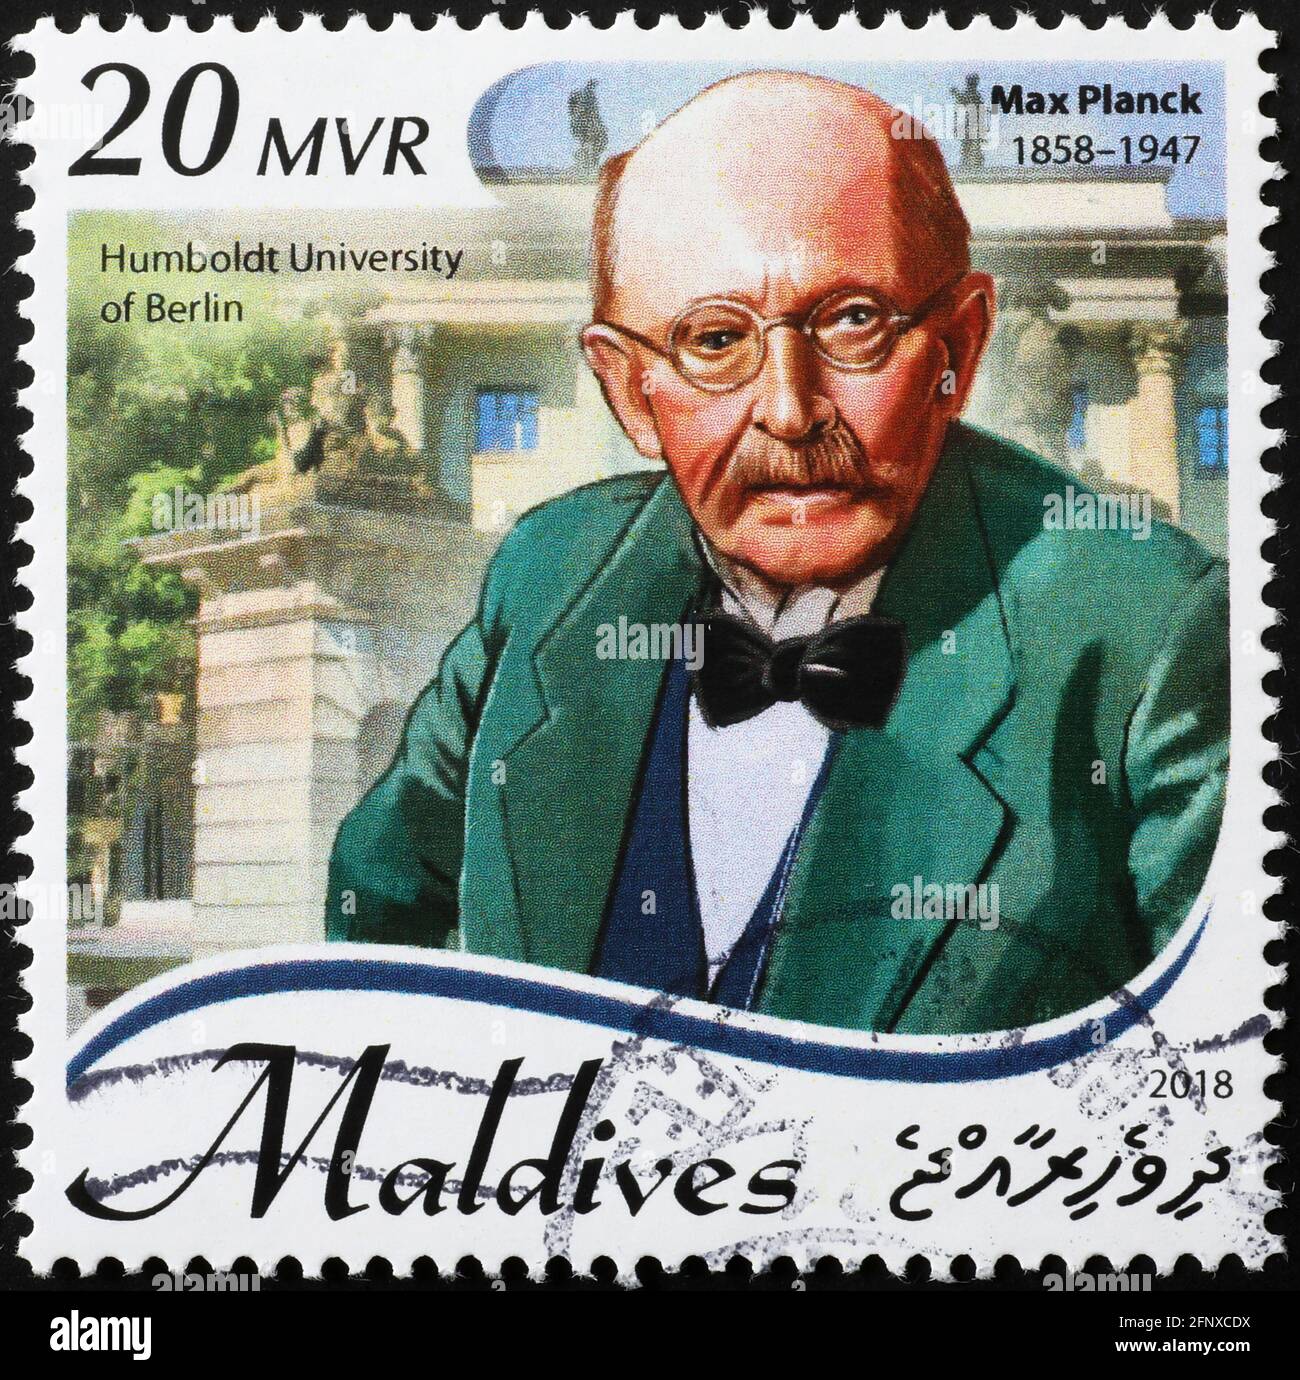 Portrait of Max Planck on postage stamp Stock Photo